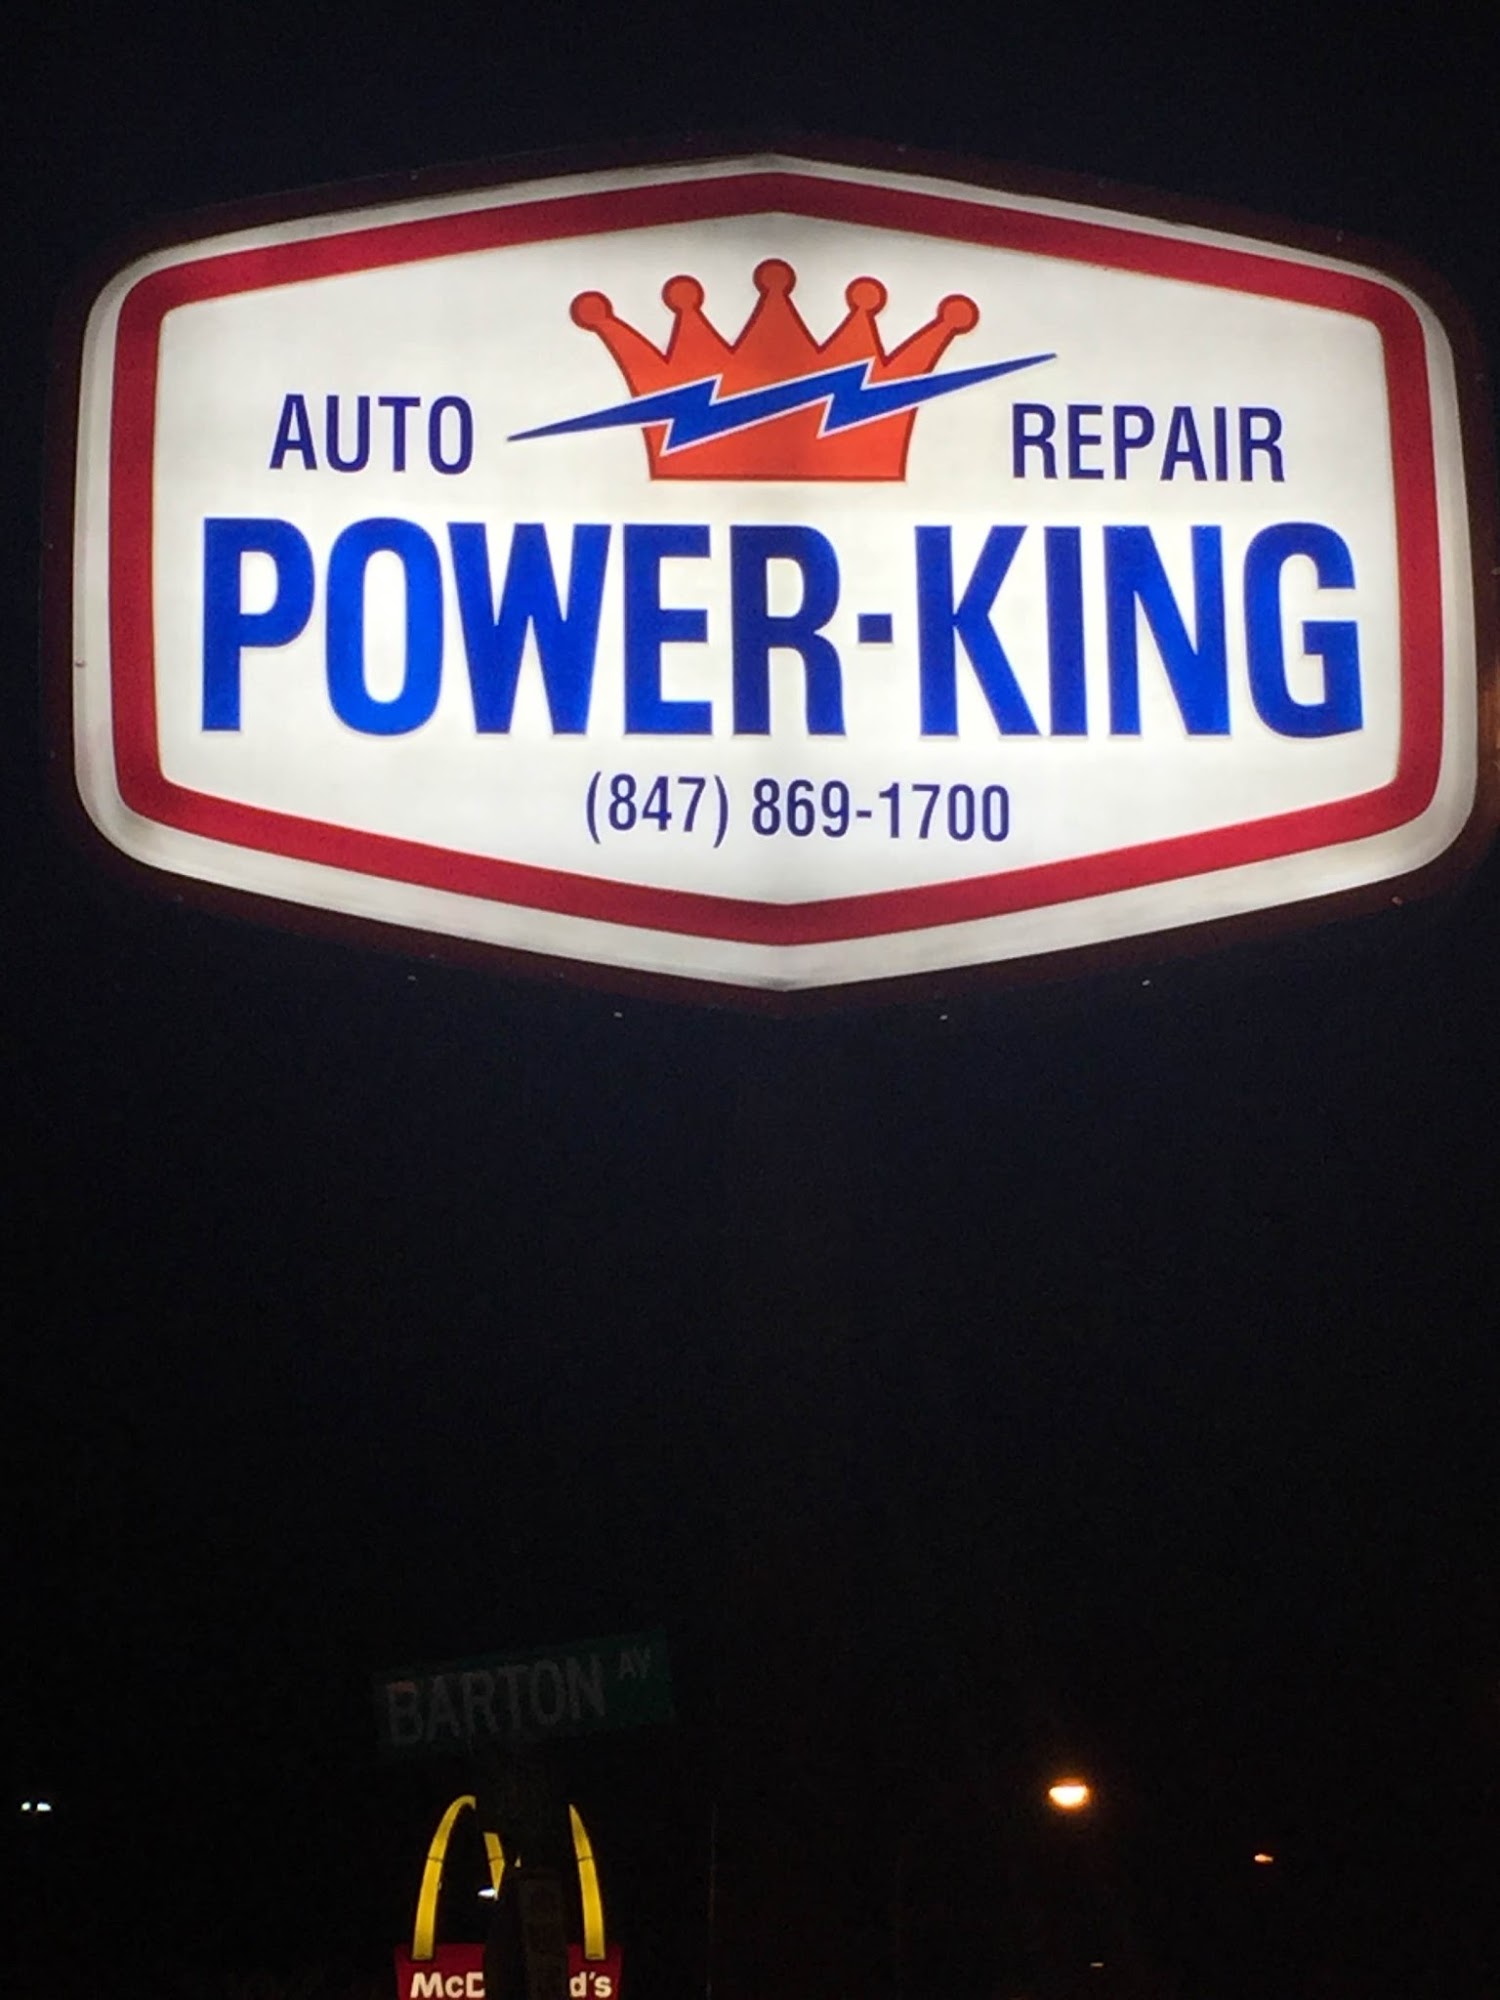 power-king auto repair